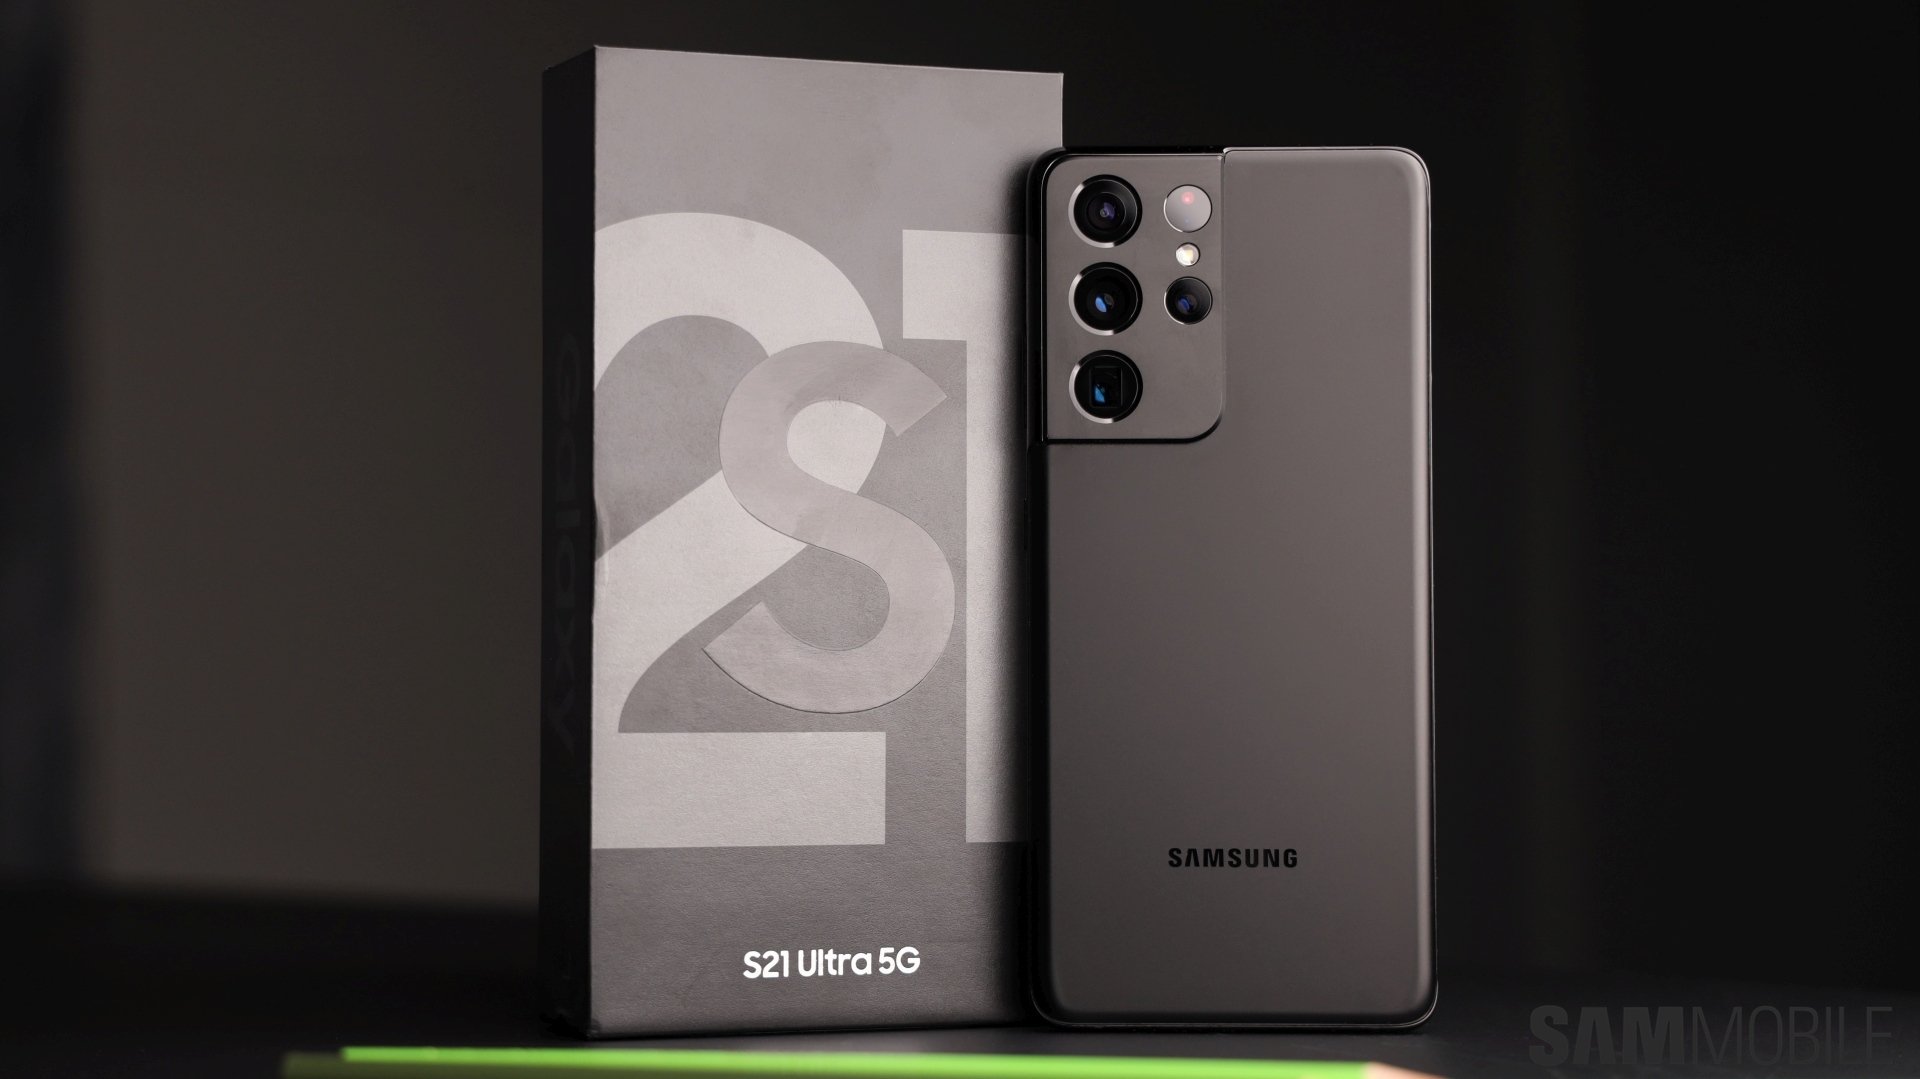 Samsung Galaxy S21 Ultra hands-on: The best just got better - SamMobile